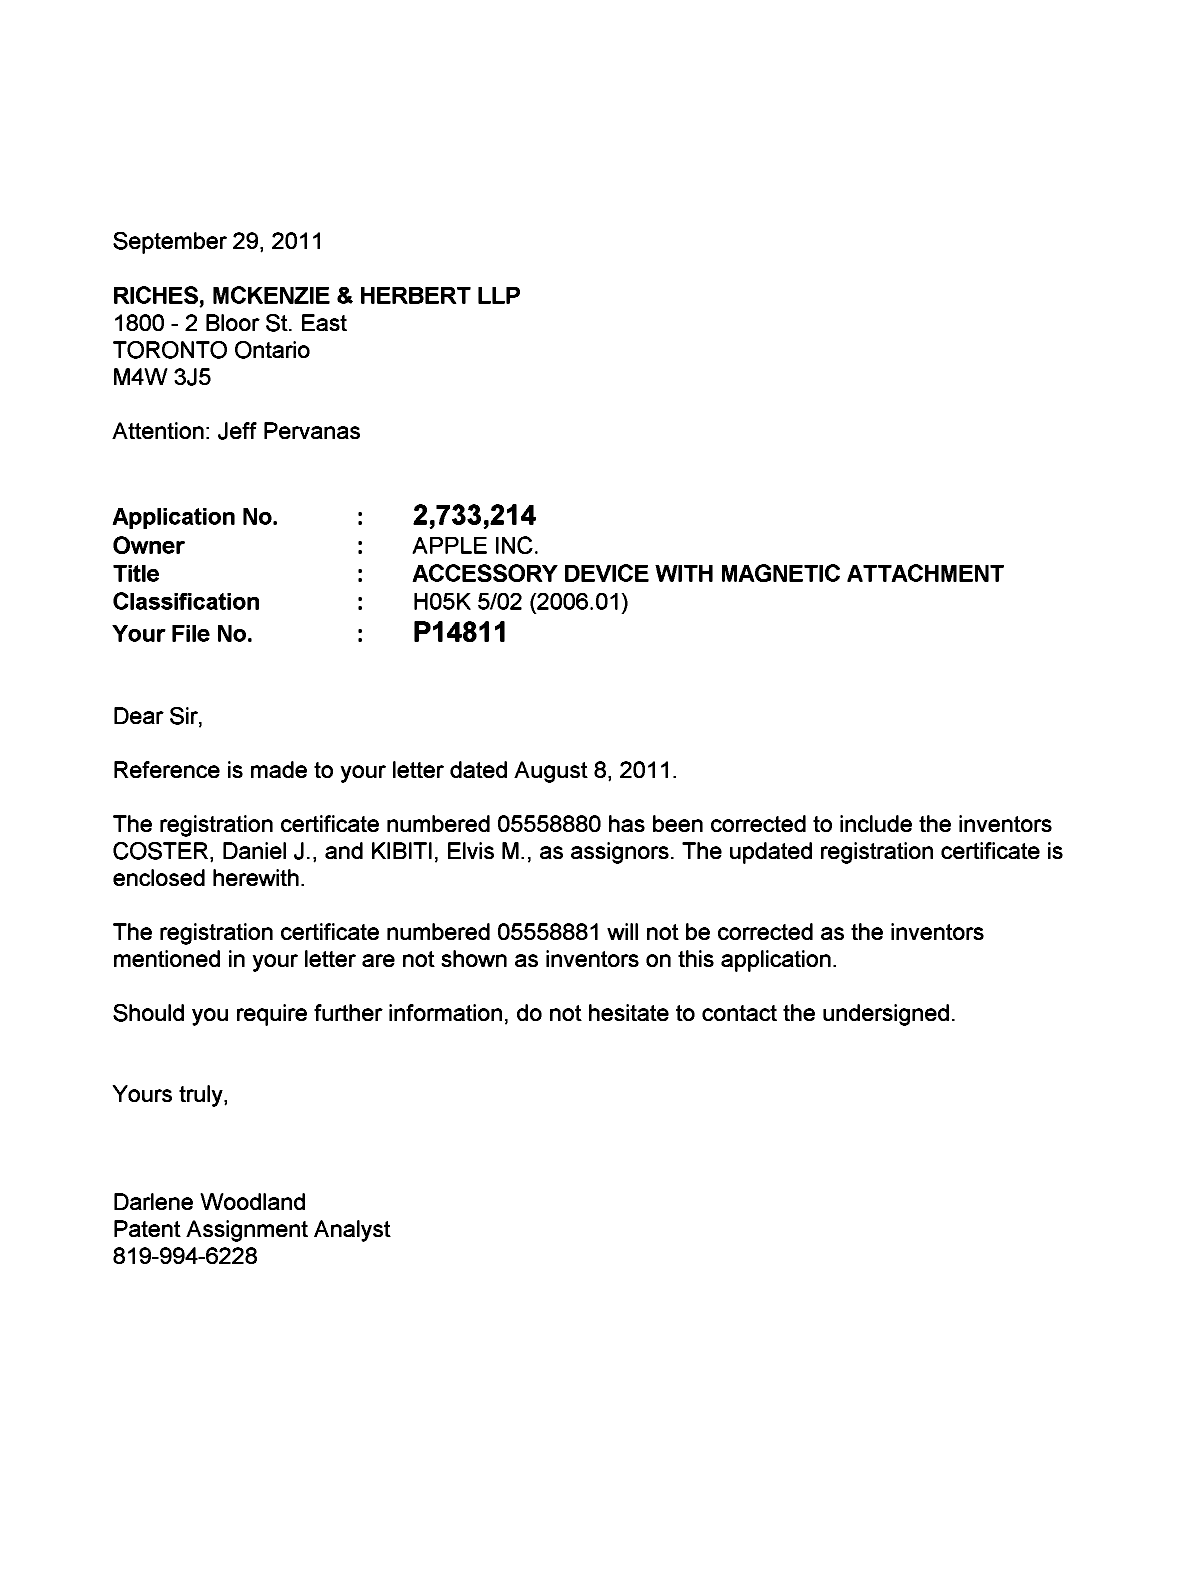 Canadian Patent Document 2733214. Correspondence 20101229. Image 1 of 1